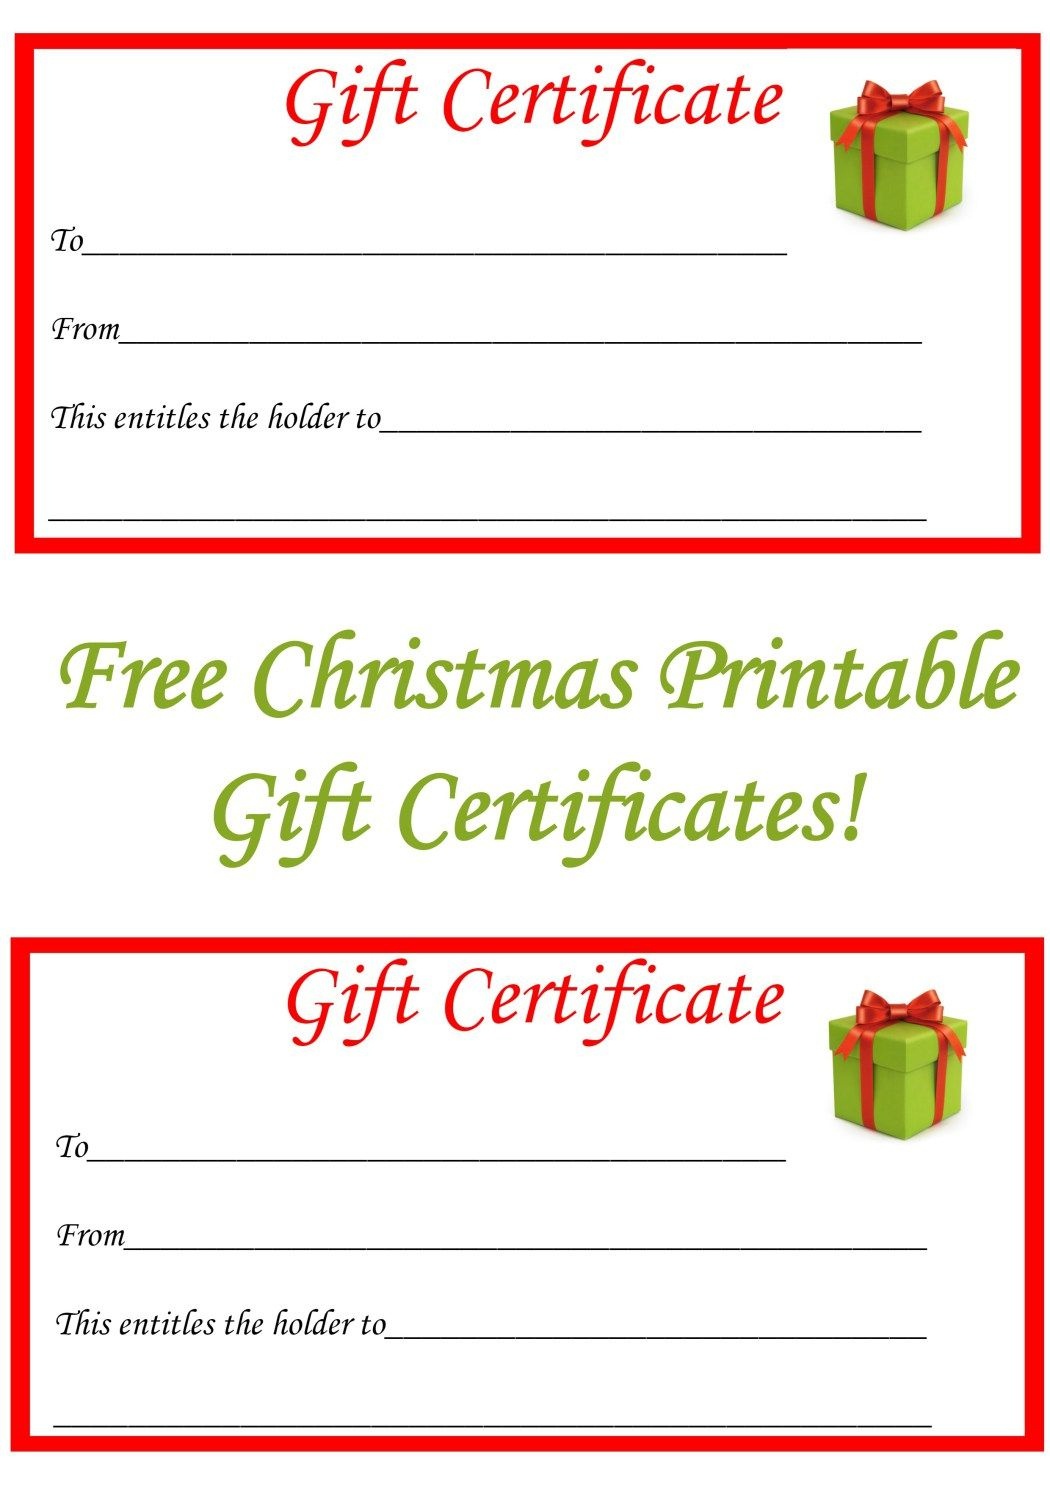 Free Christmas Printable Gift Certificates | Gift Ideas | Christmas - Free Printable Christmas Gift Voucher Templates